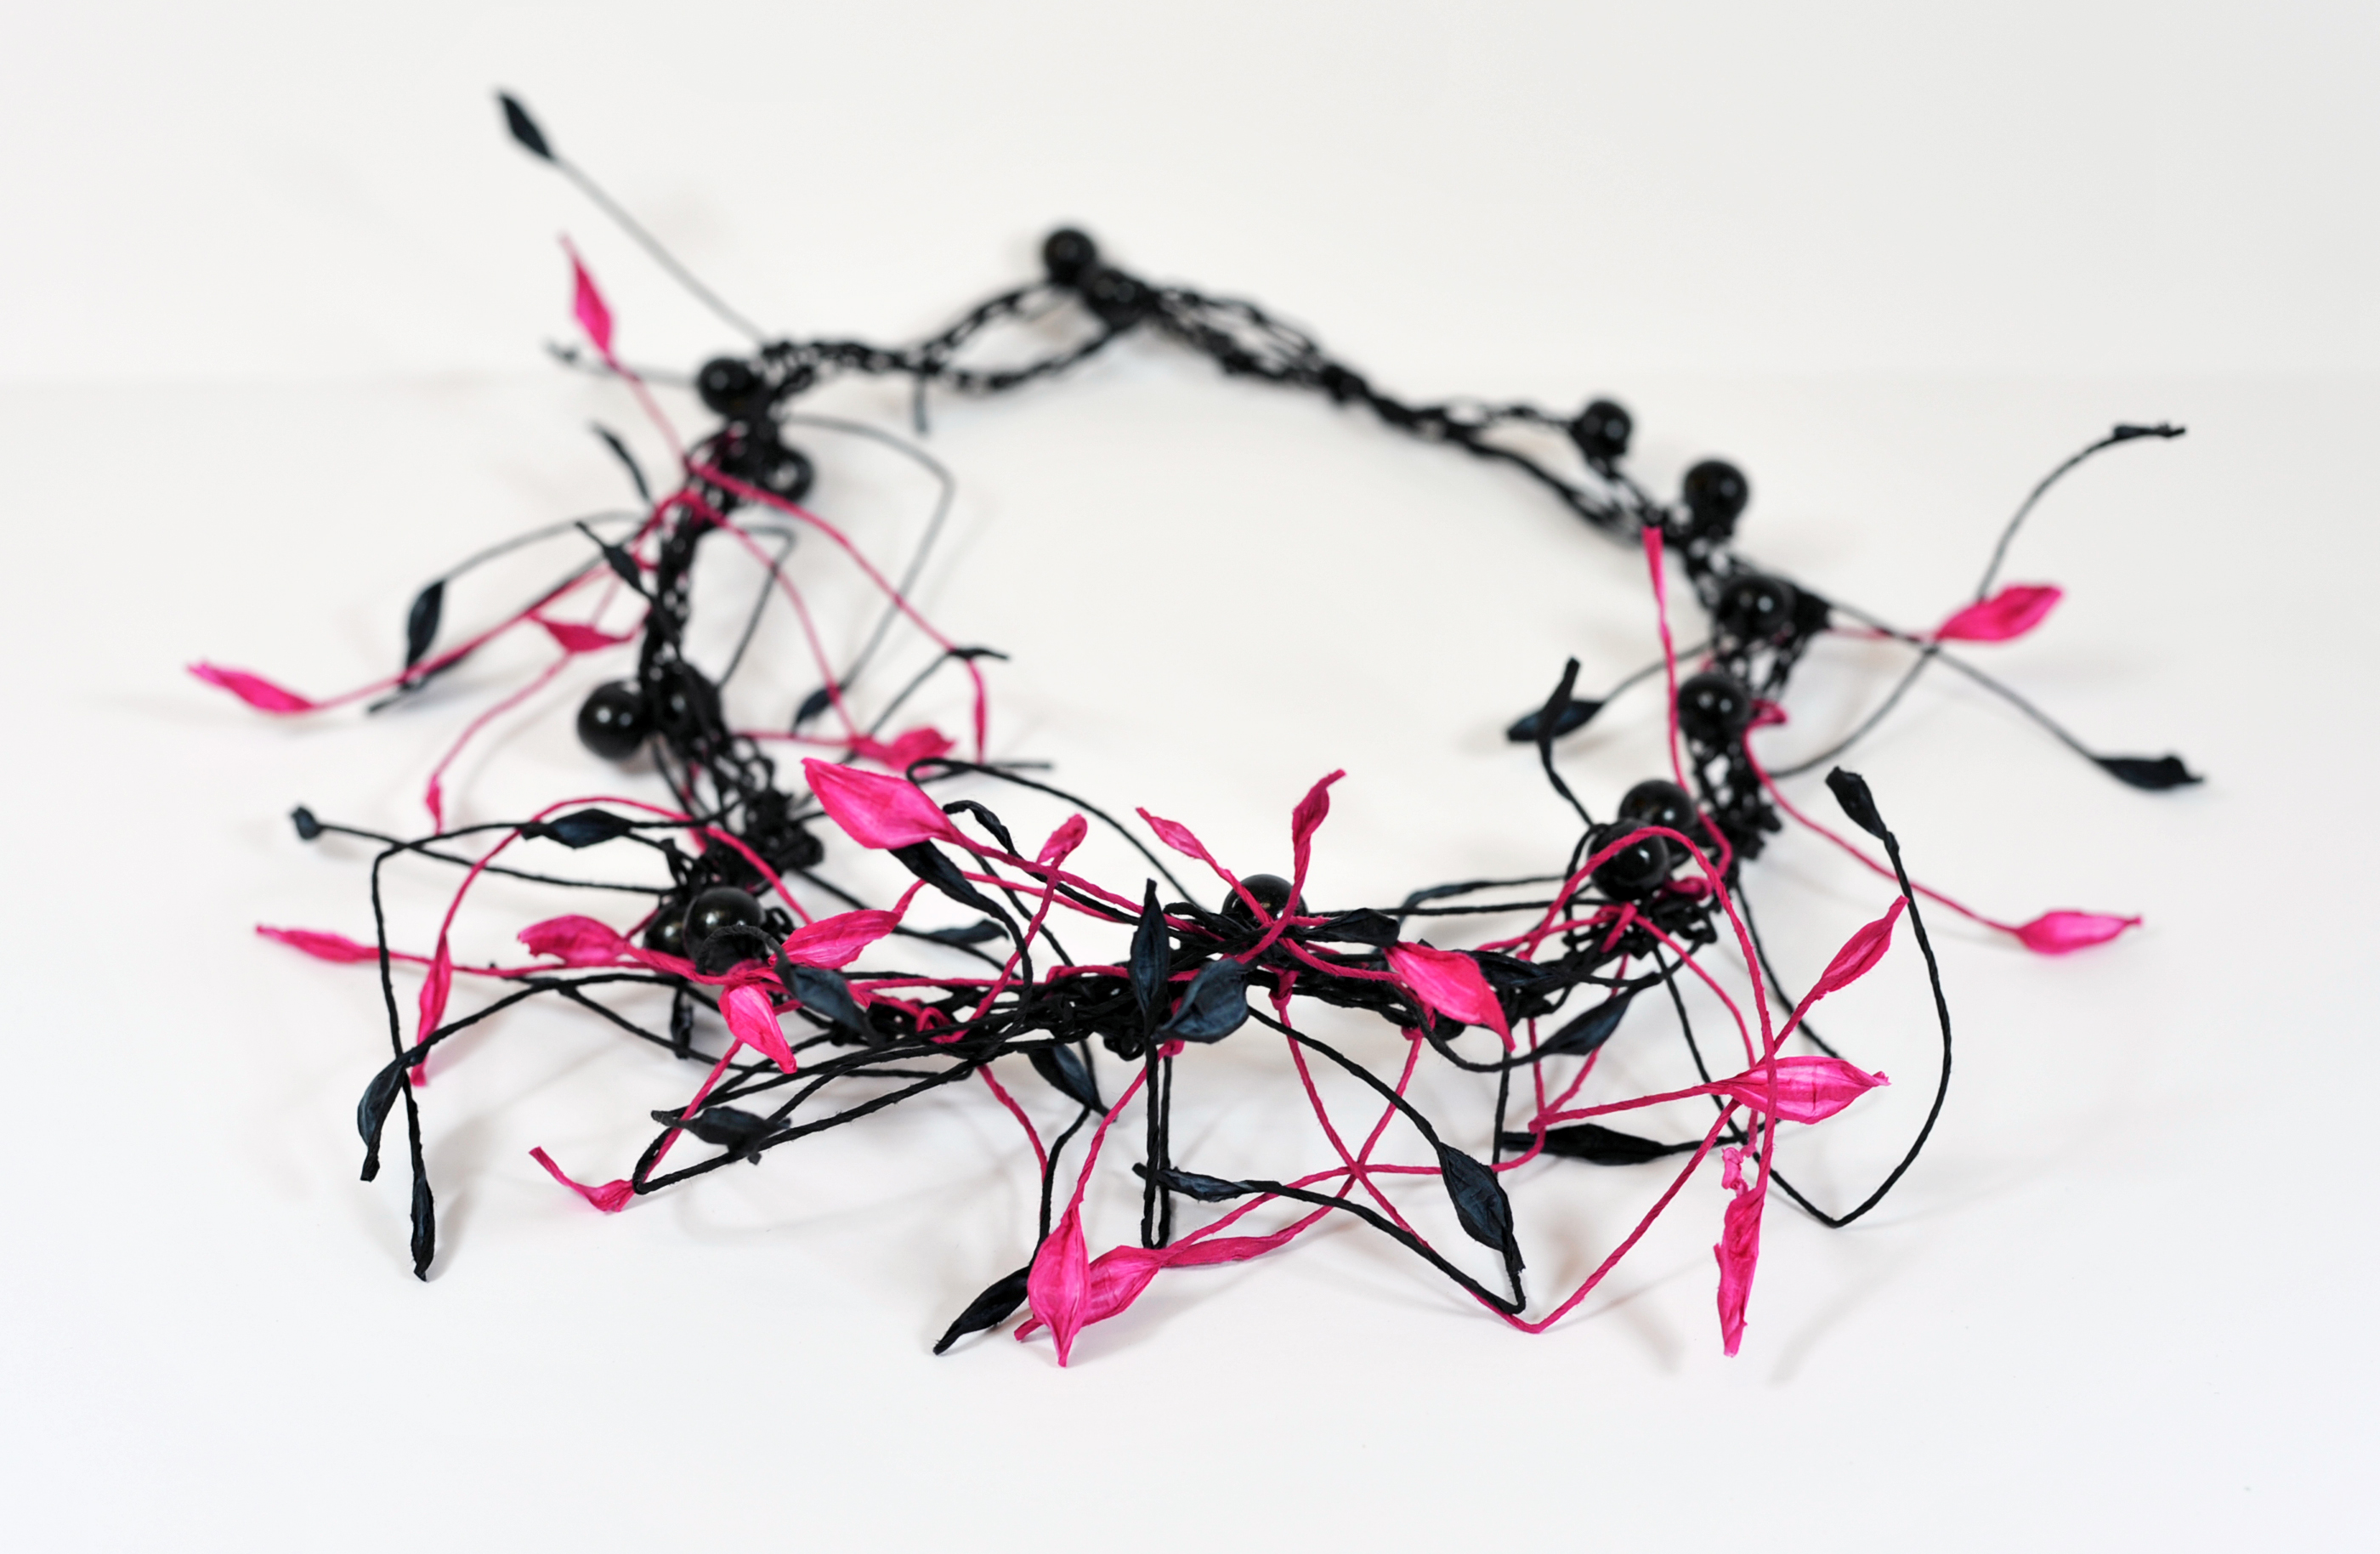 PaperPhine - Crochet Necklace - Paperjewelry - Paperjewellery - Evas Necklace - DIY - Paperyarn